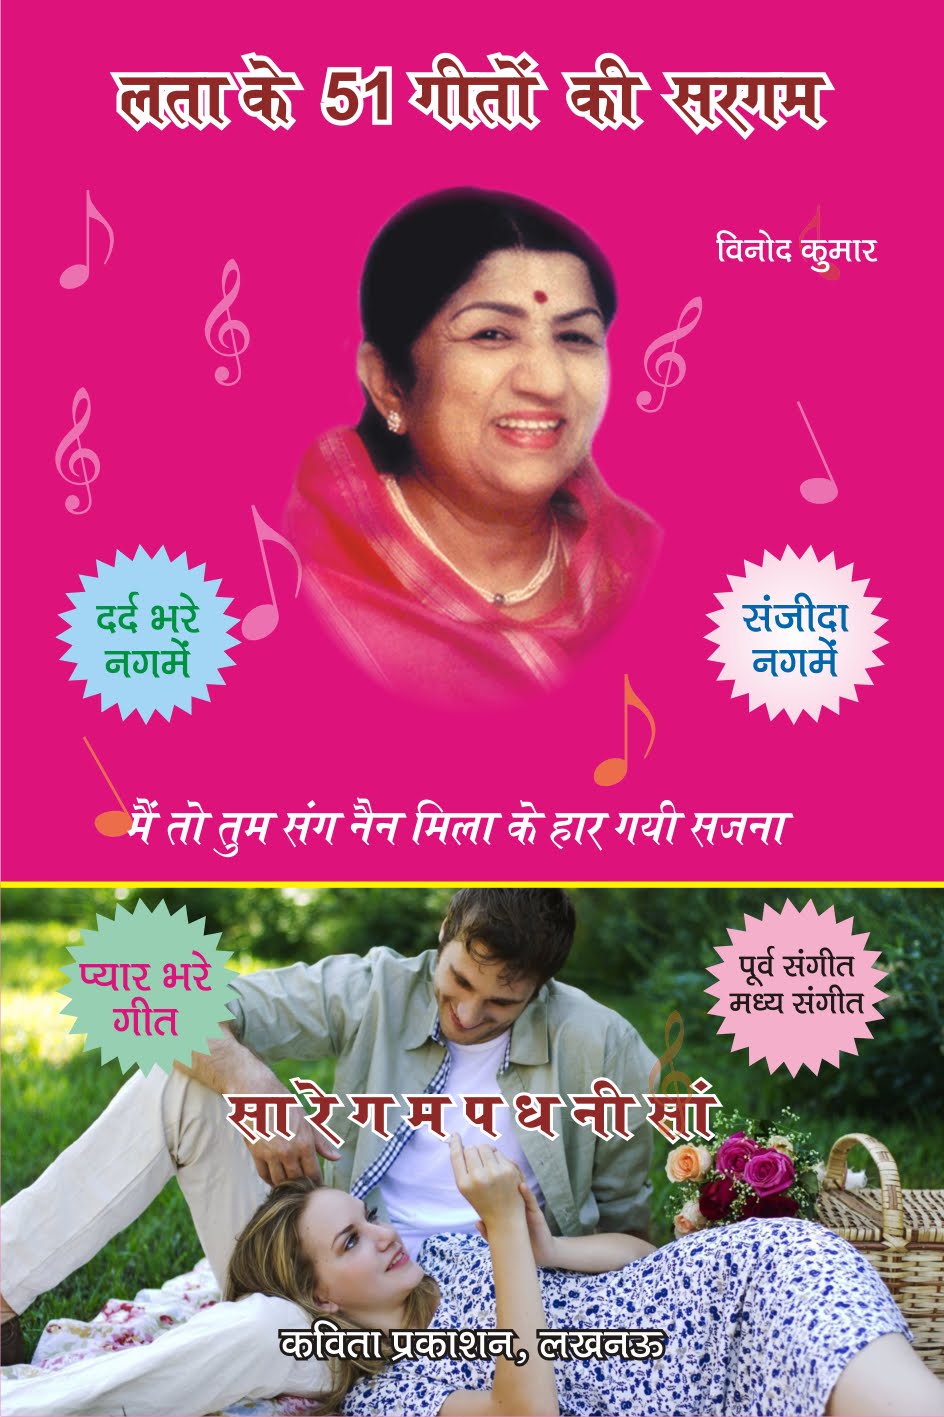 Lata ke 51 Geeton ki Sargam book in Hindi